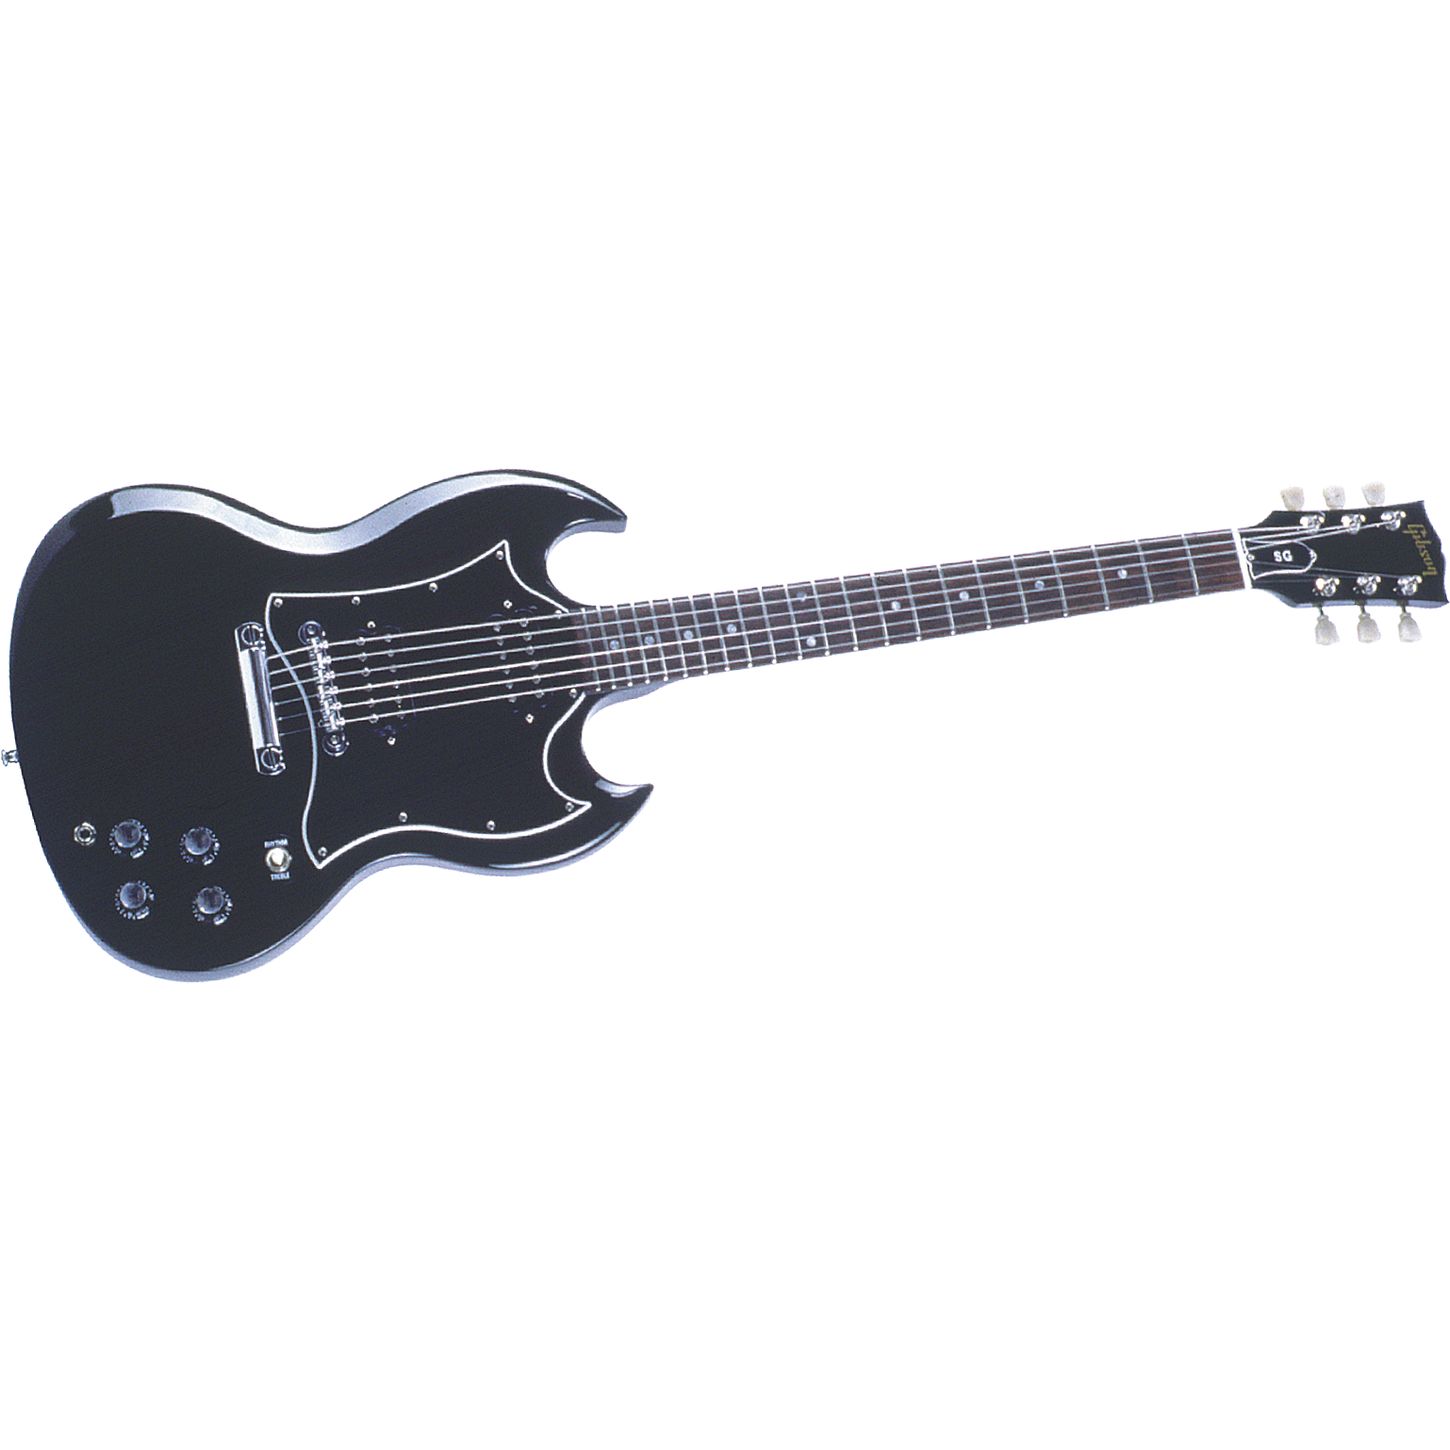 Black Gibson Sg